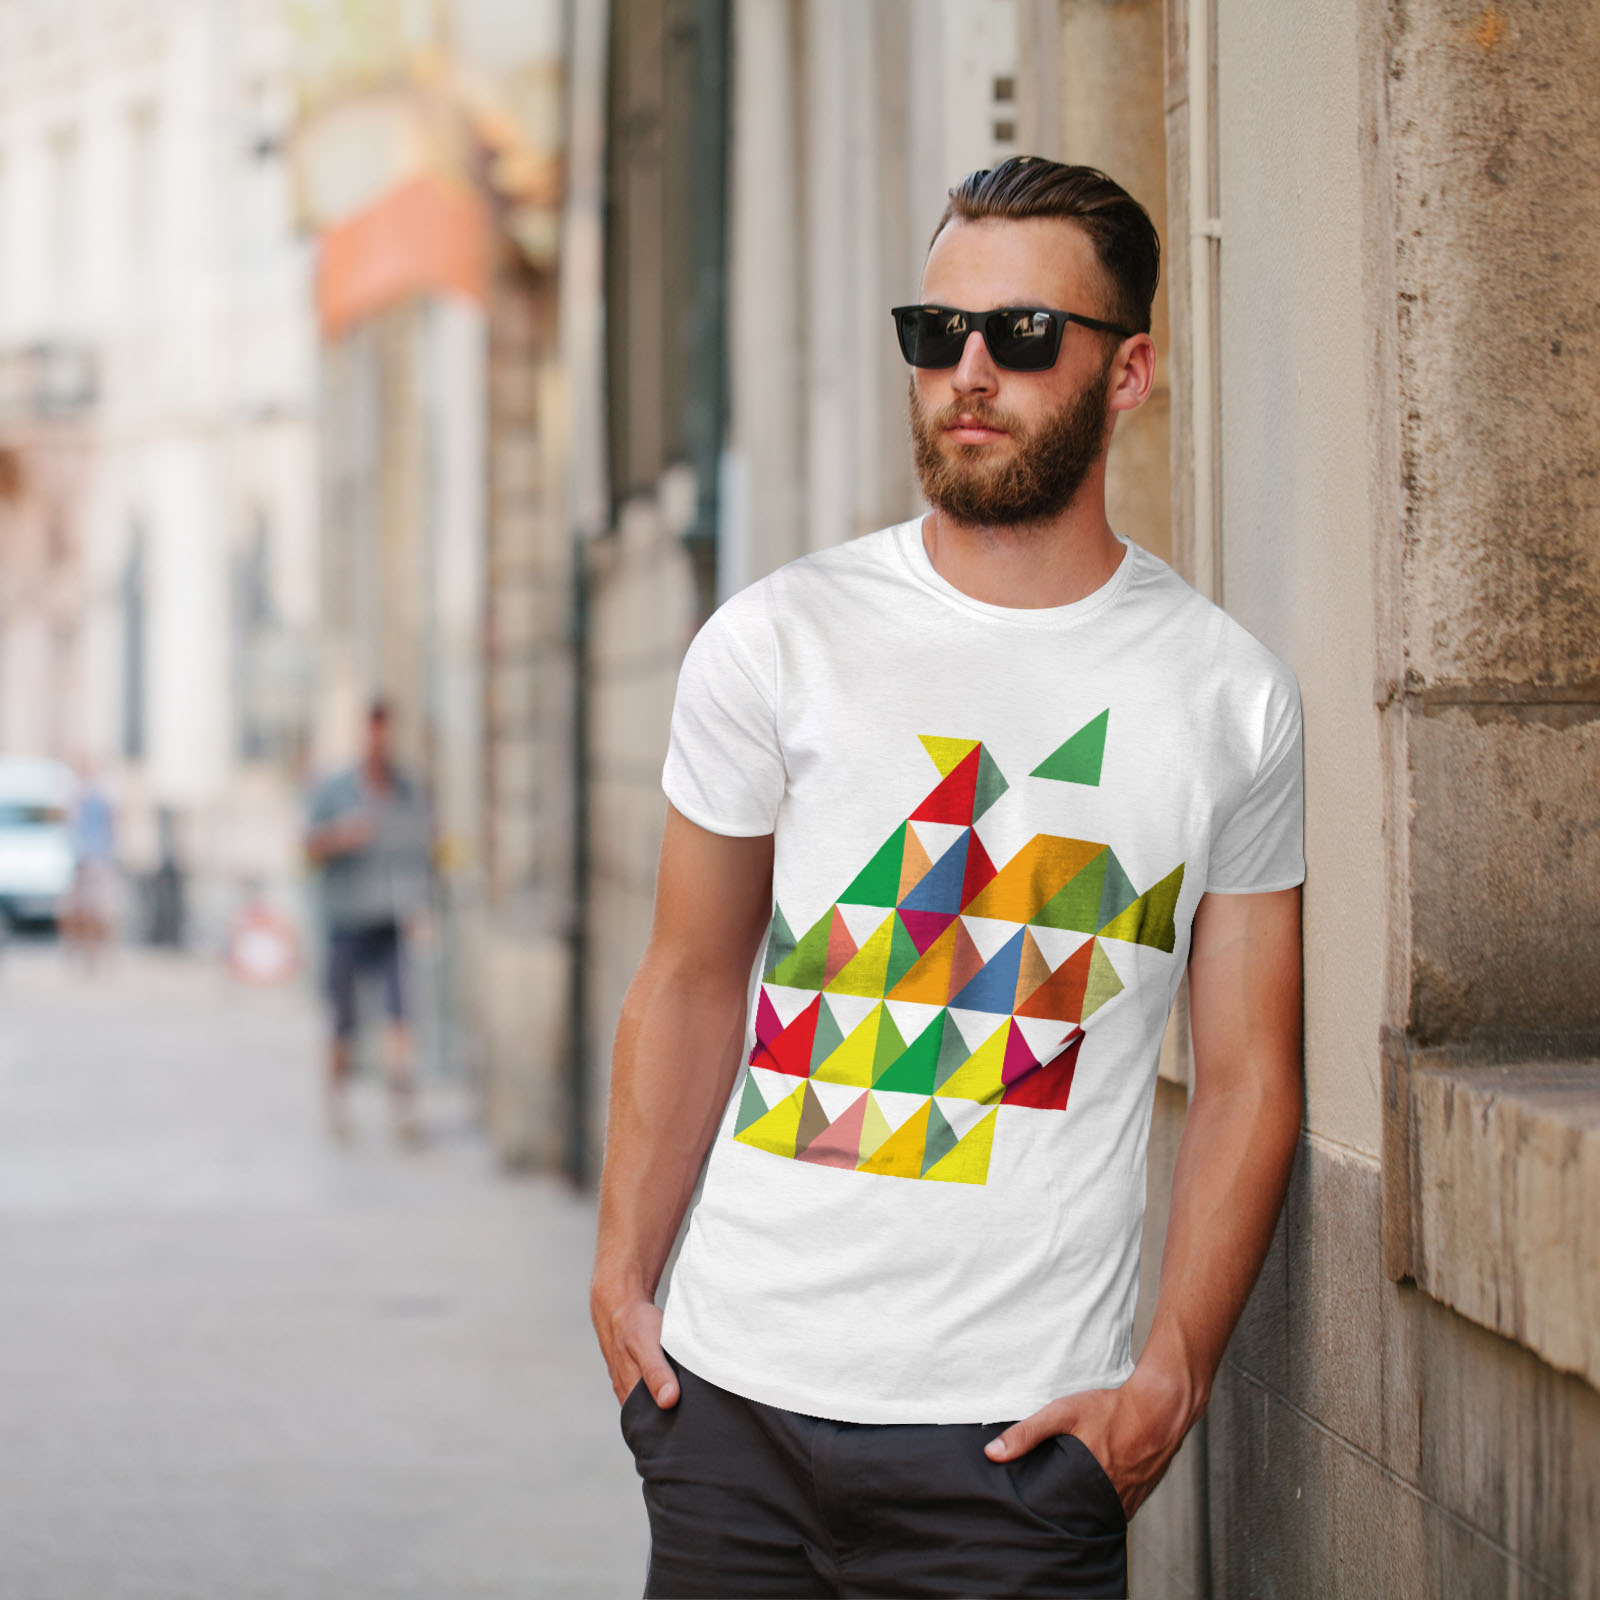 Wellcoda Geometric Shape Mens T-shirt, Colorful Graphic Design Printed ...